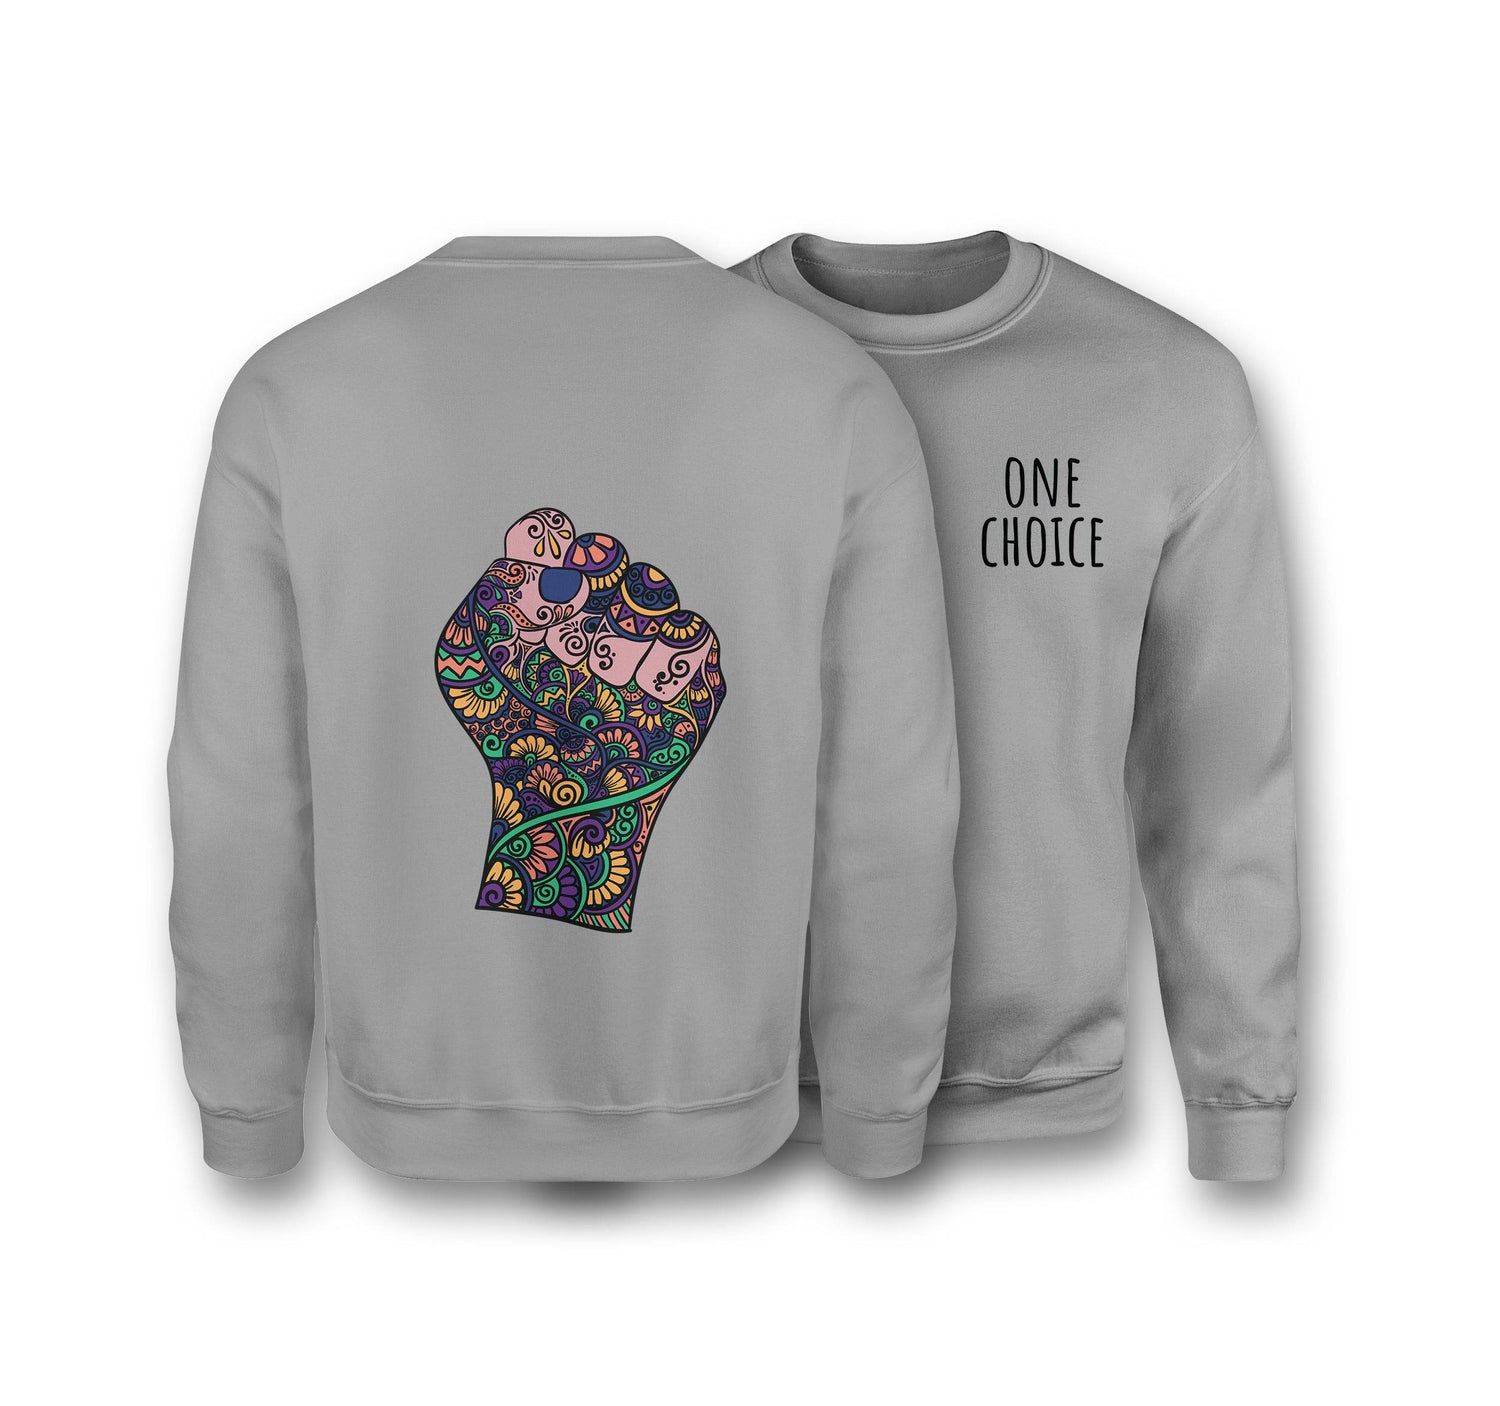 Raised Fist - Organic Cotton Sweatshirt - One Choice Apparel